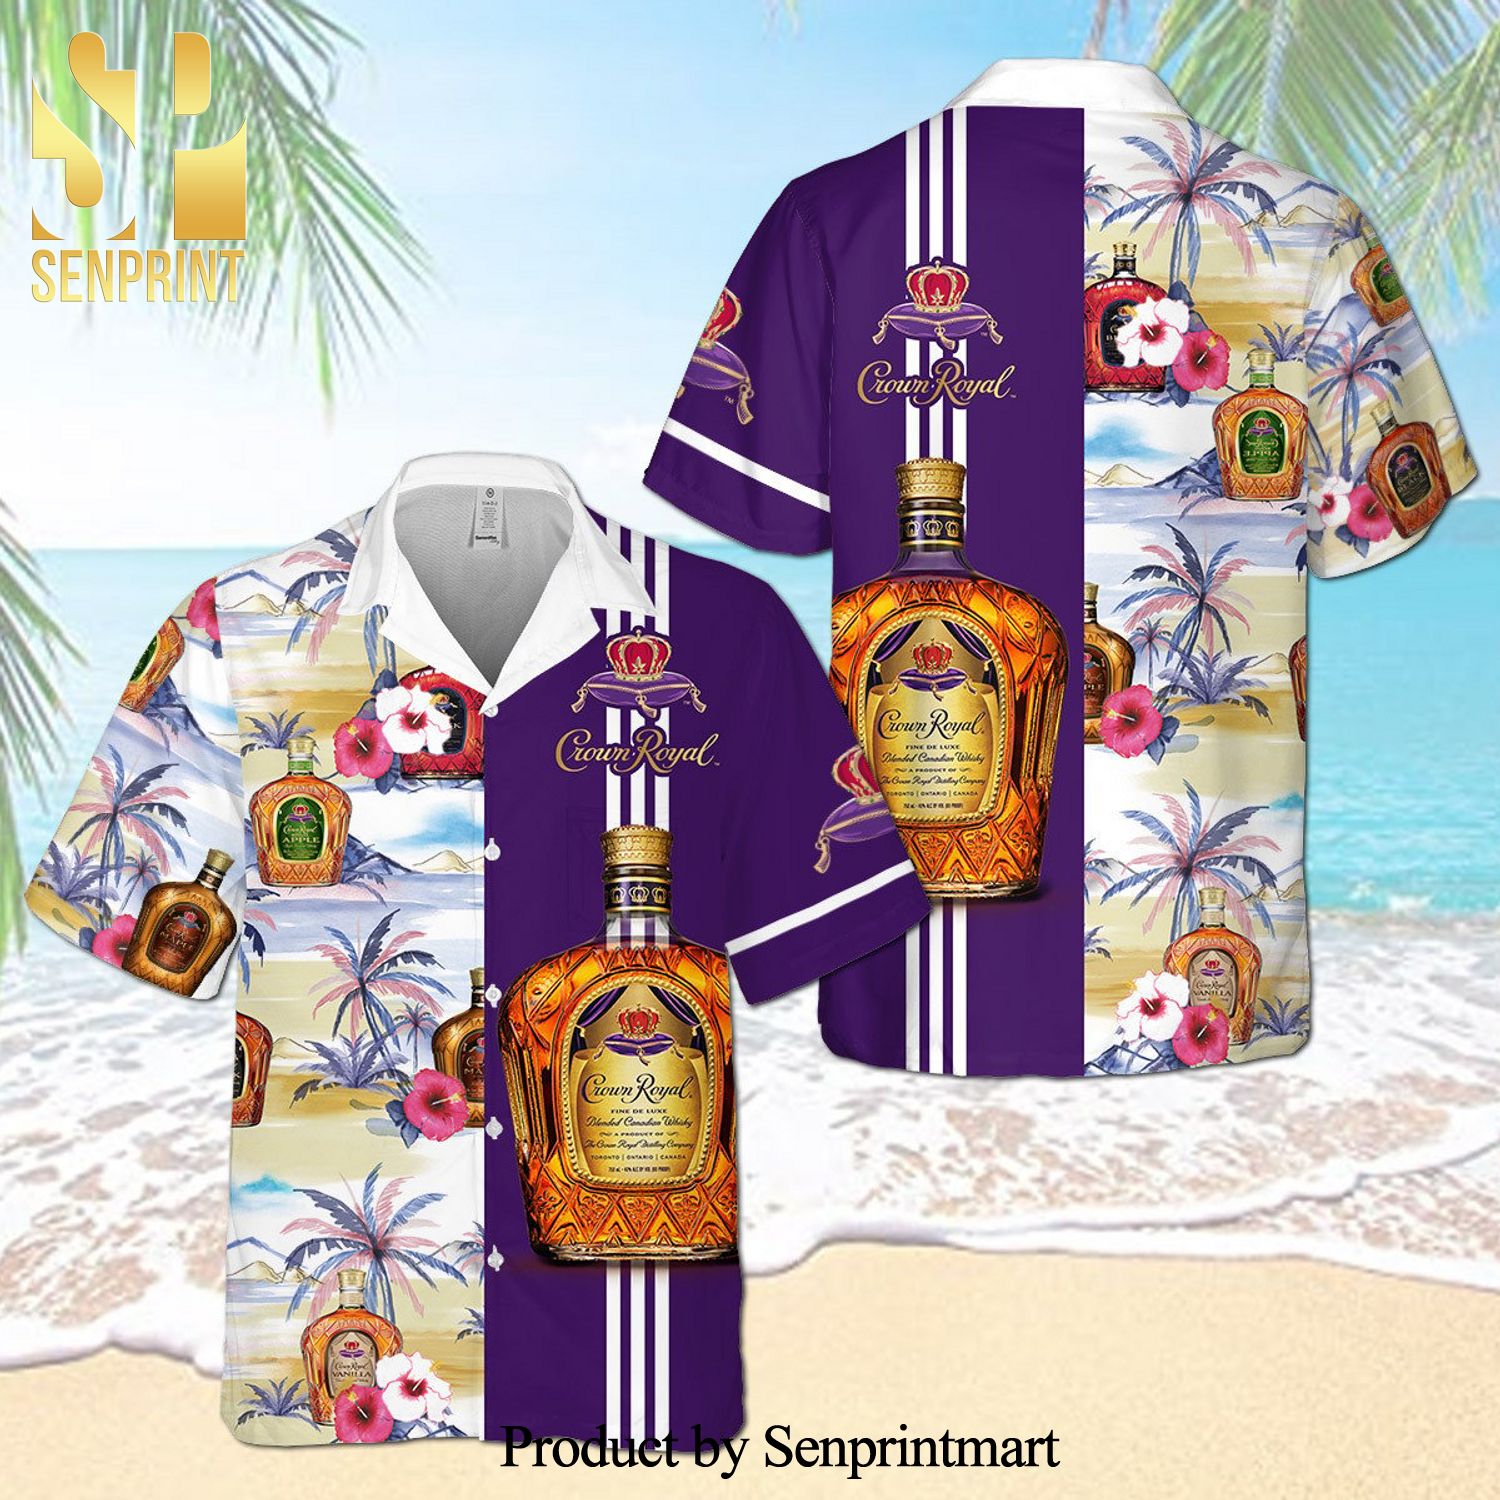 Crown Royal Collection Hibiscus Palm Tree Full Printing Aloha Summer Beach Hawaiian Shirt – Purple